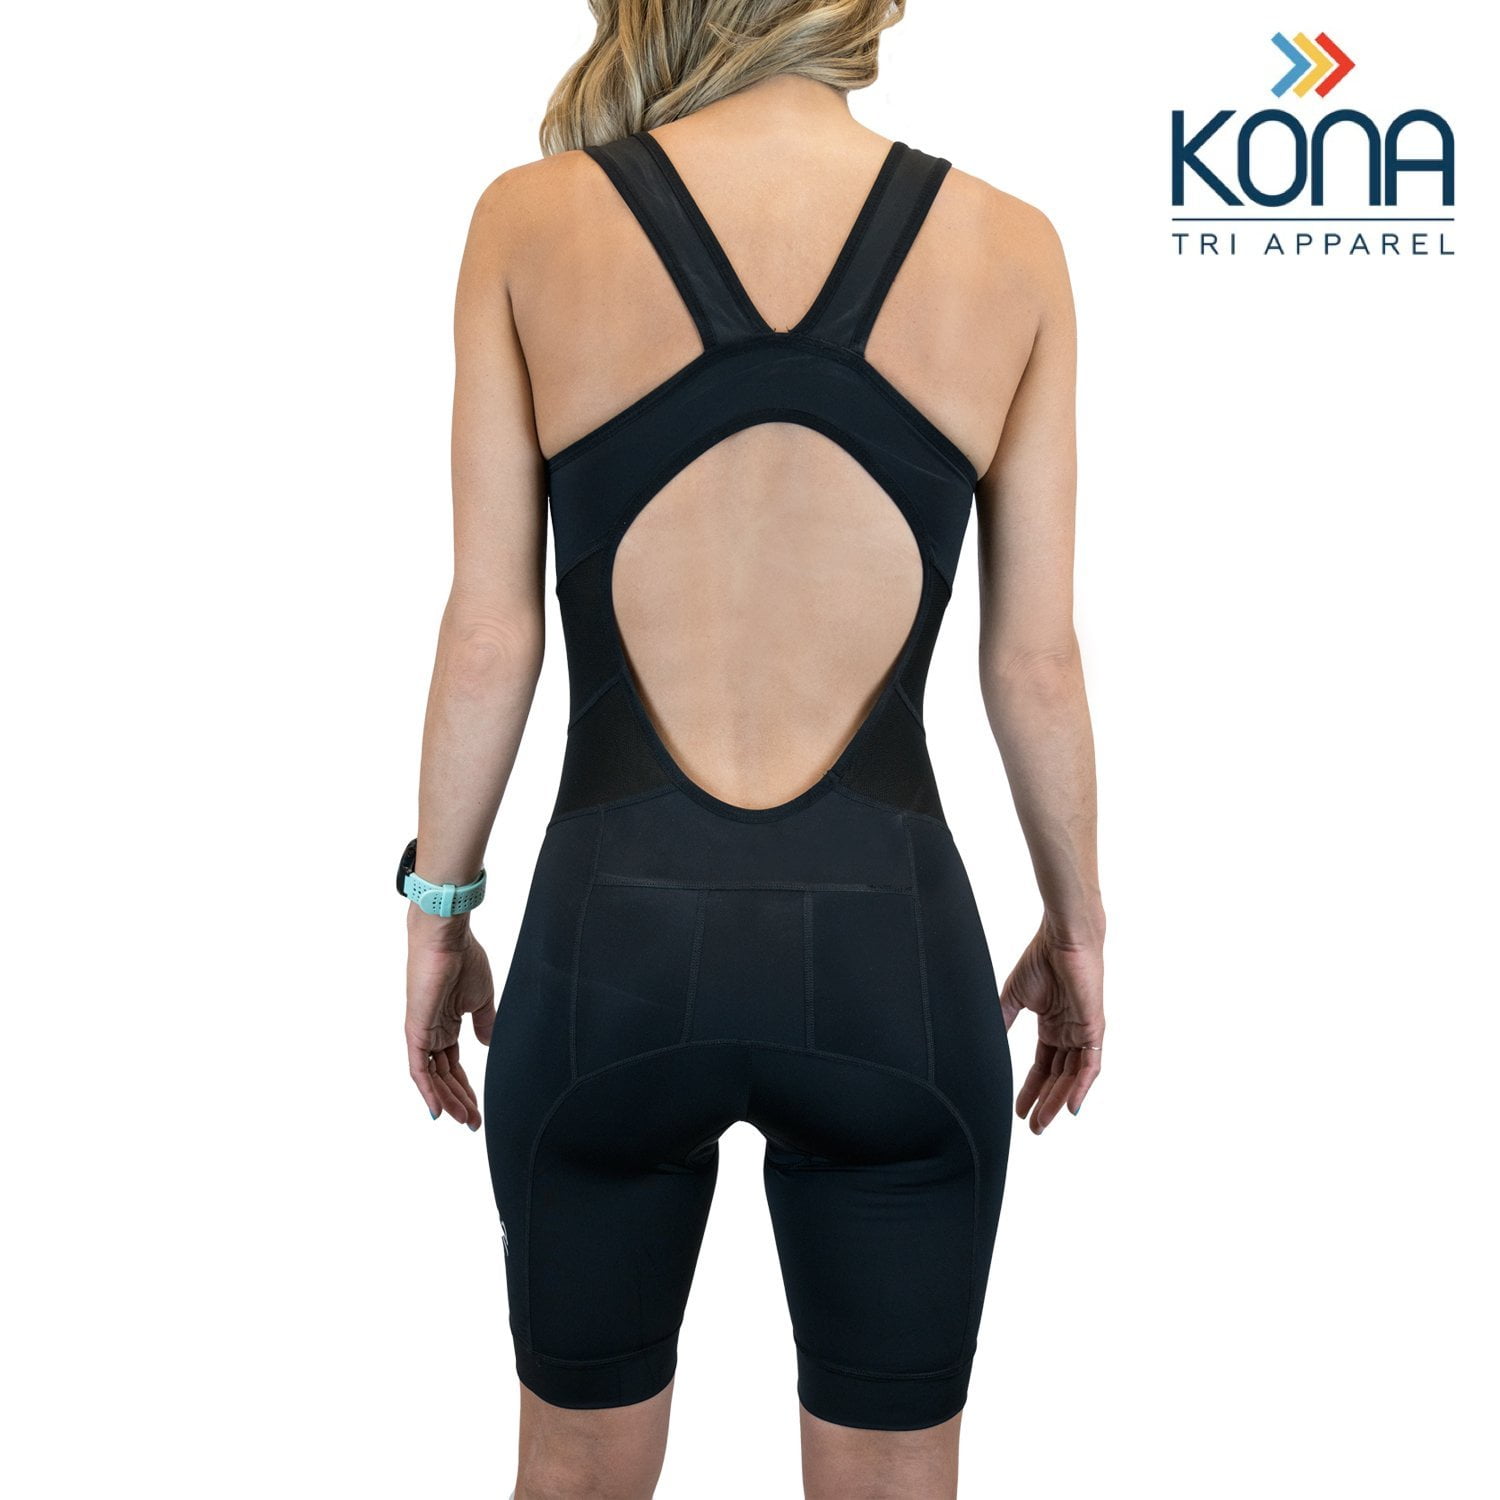 KONA Team Womens Triathlon Race Suit One-Piece Vest and Short Combo with Body-Mapped Ventilation Speedsuit Skinsuit Trisuit Sleeveless 